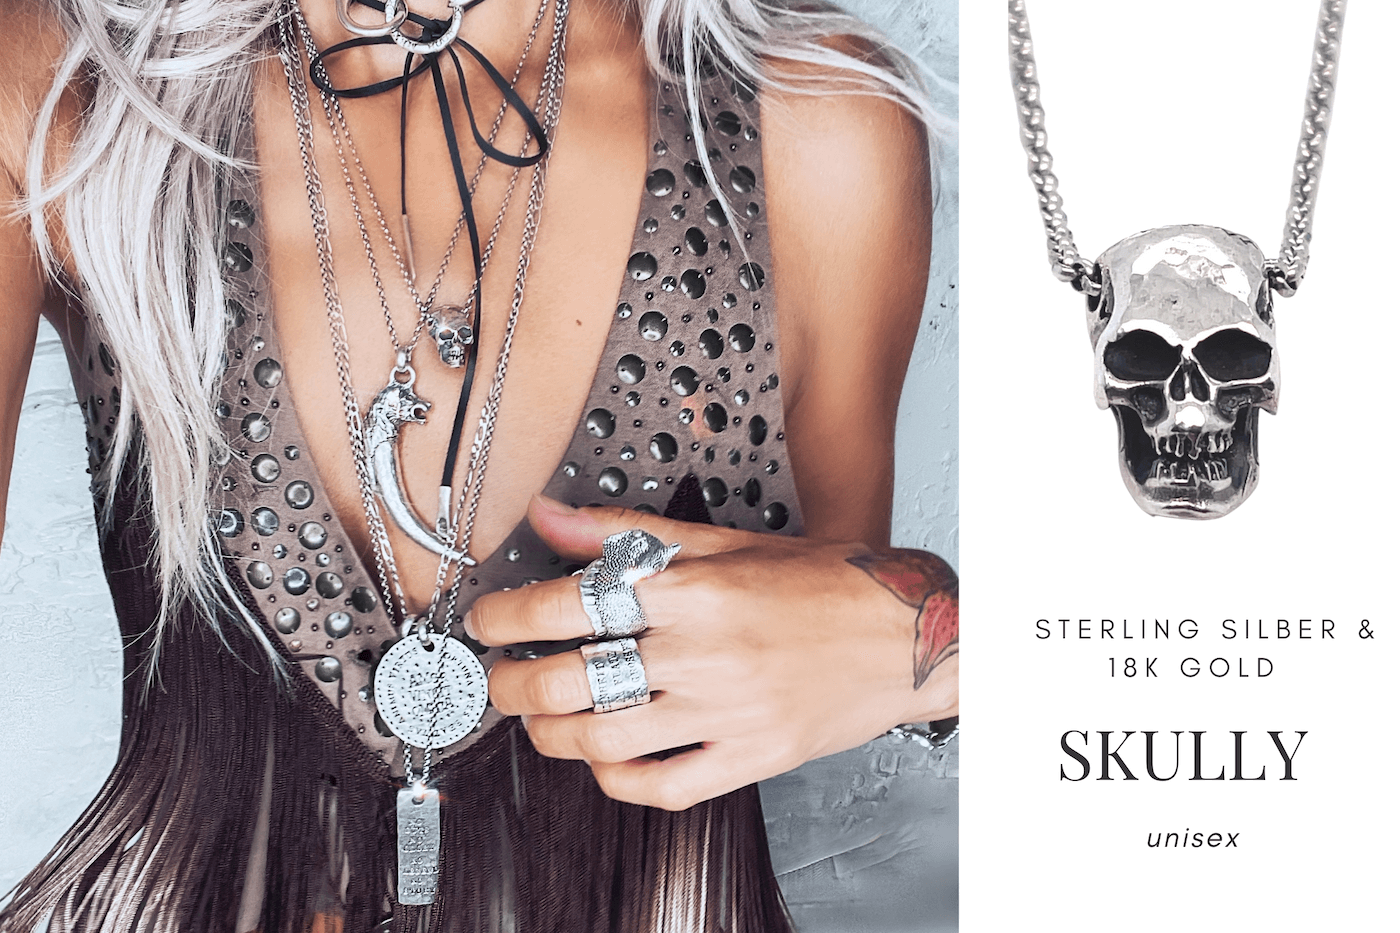 Kette Totenkopf | Kette Silber & Goldkette | CAPULET – CAPULET Jewelry | Kettenanhänger